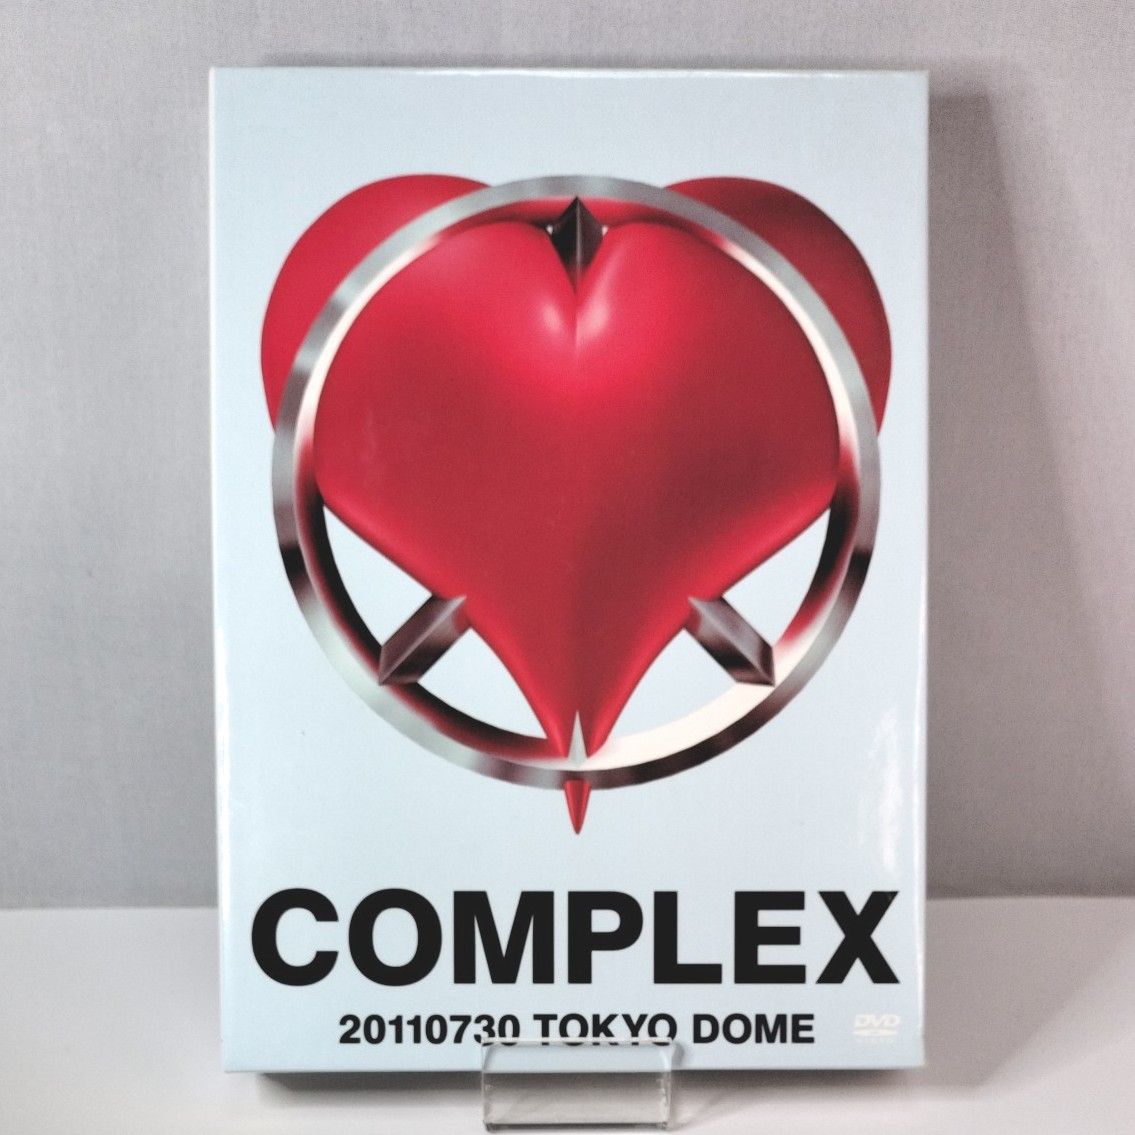 【DVD】COMPLEX 20110730 TOKYO DOME 日本一心 コンプレックス 吉川晃司 布袋寅泰